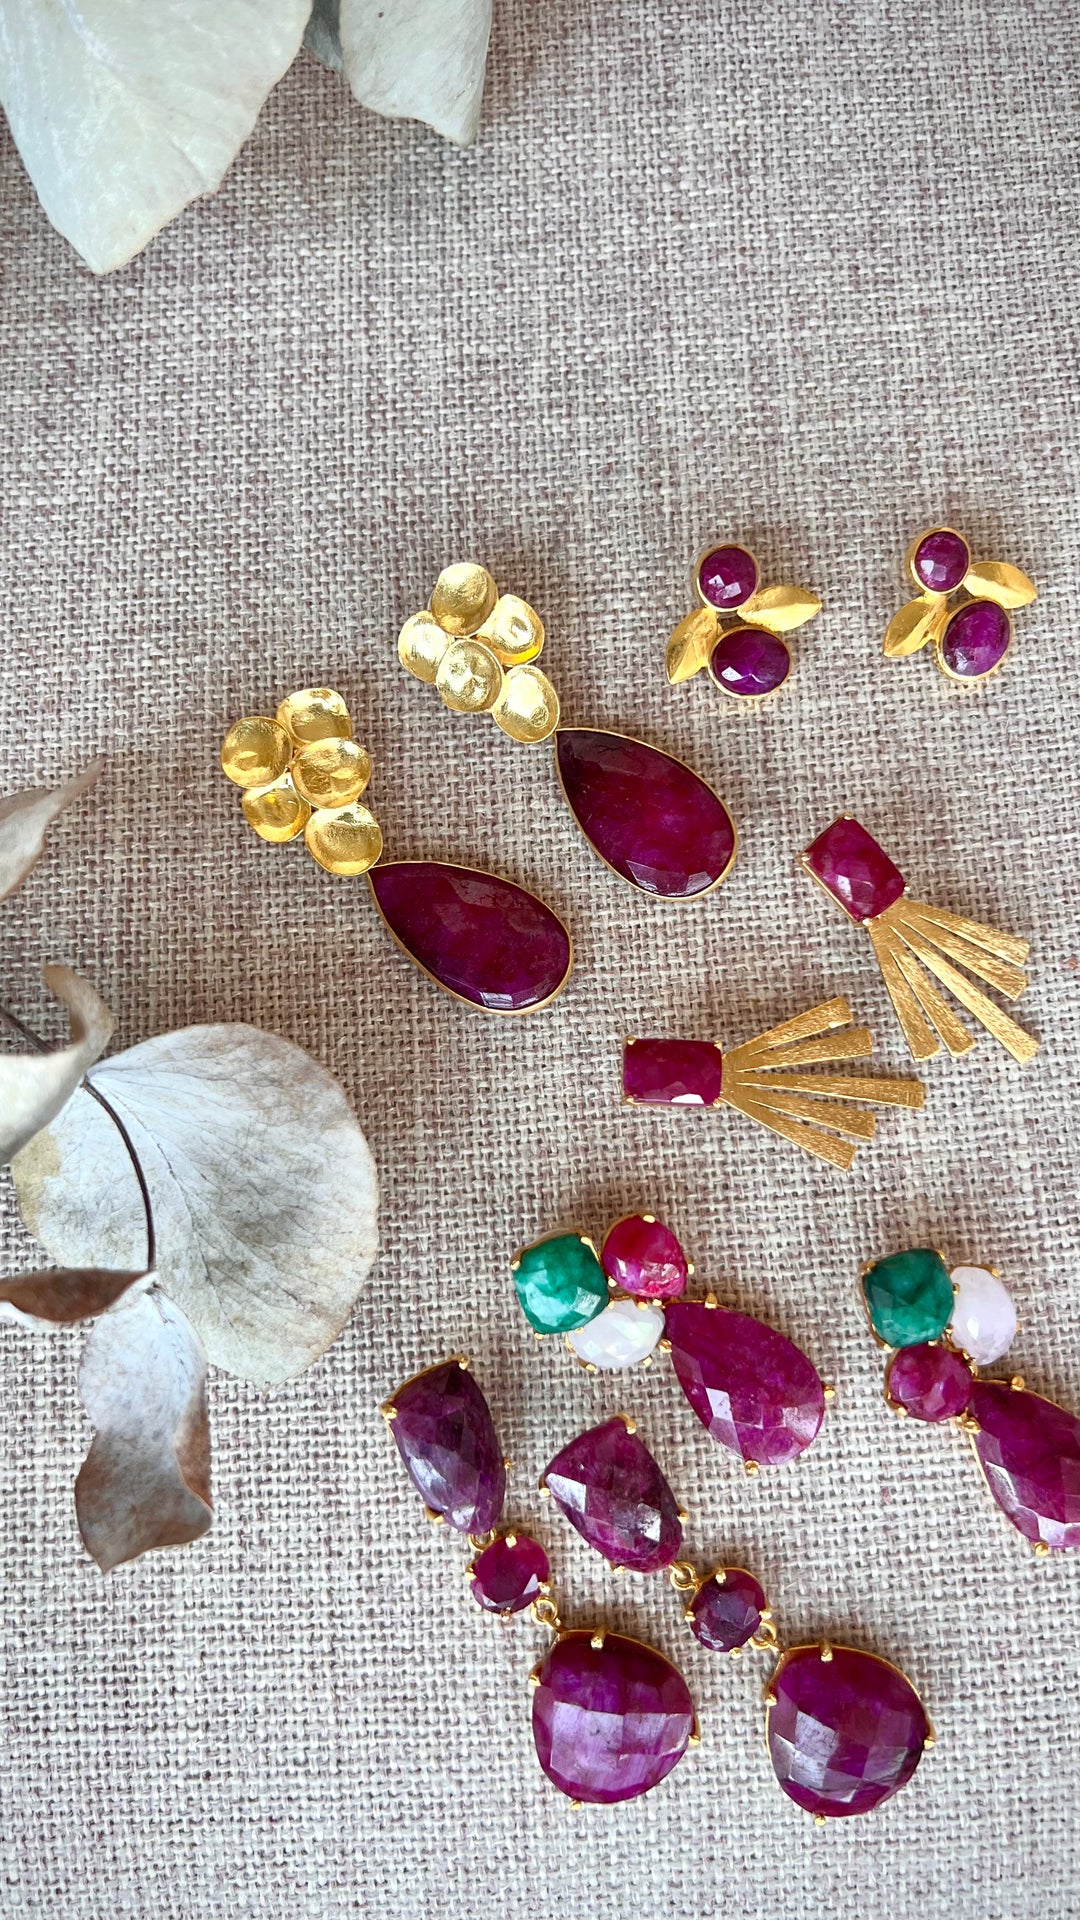 Earrings with Aspas Garnet stones